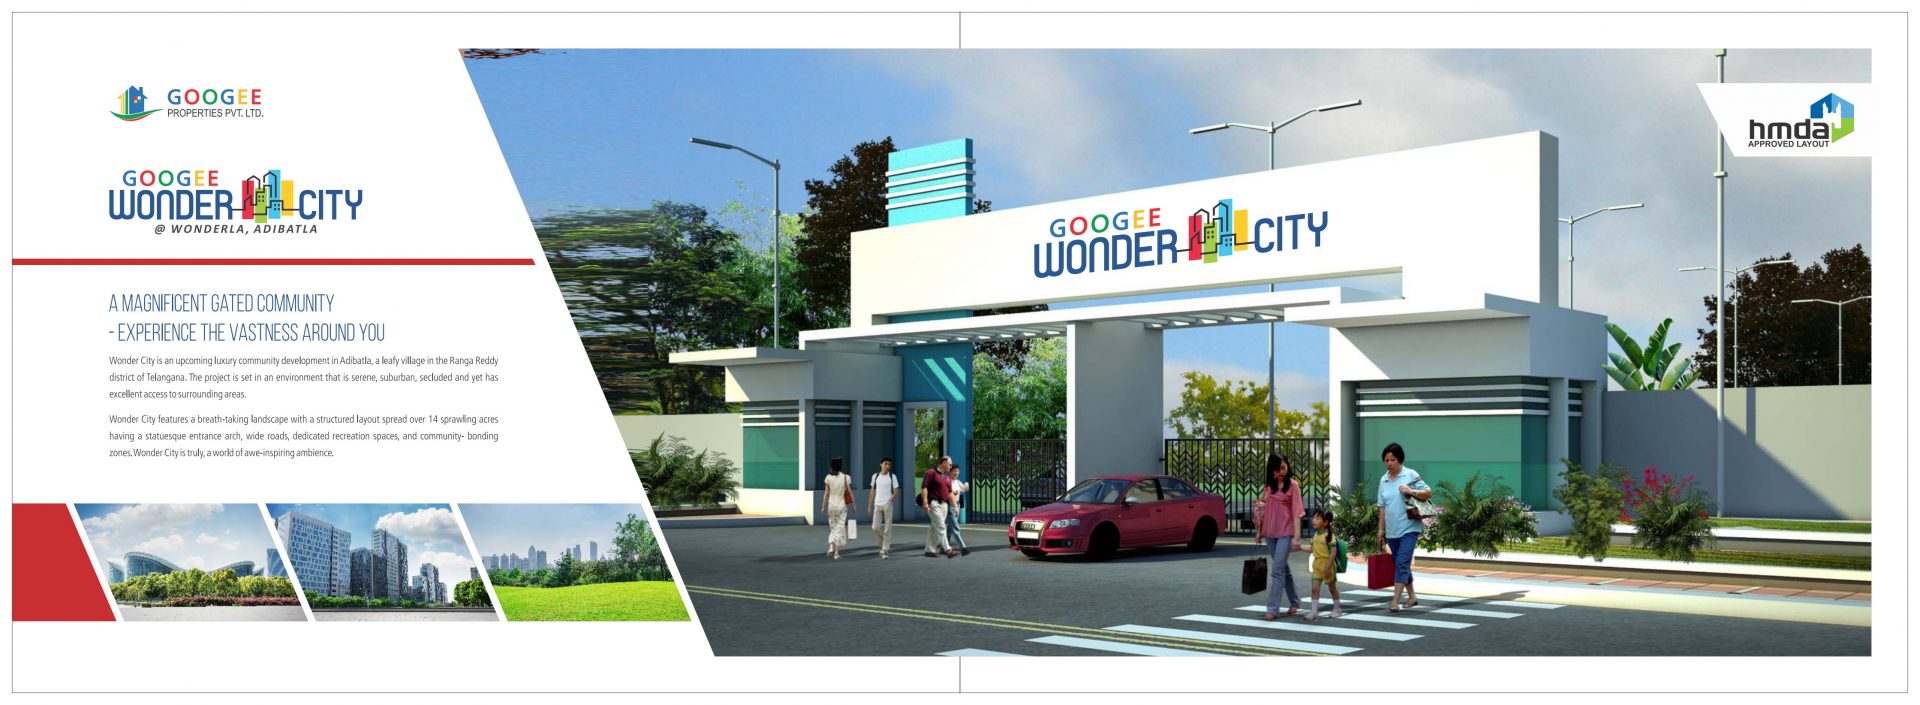 Wonderla Amusement Park (Hyderabad) - Entry fee, Timings, Rides, Offers